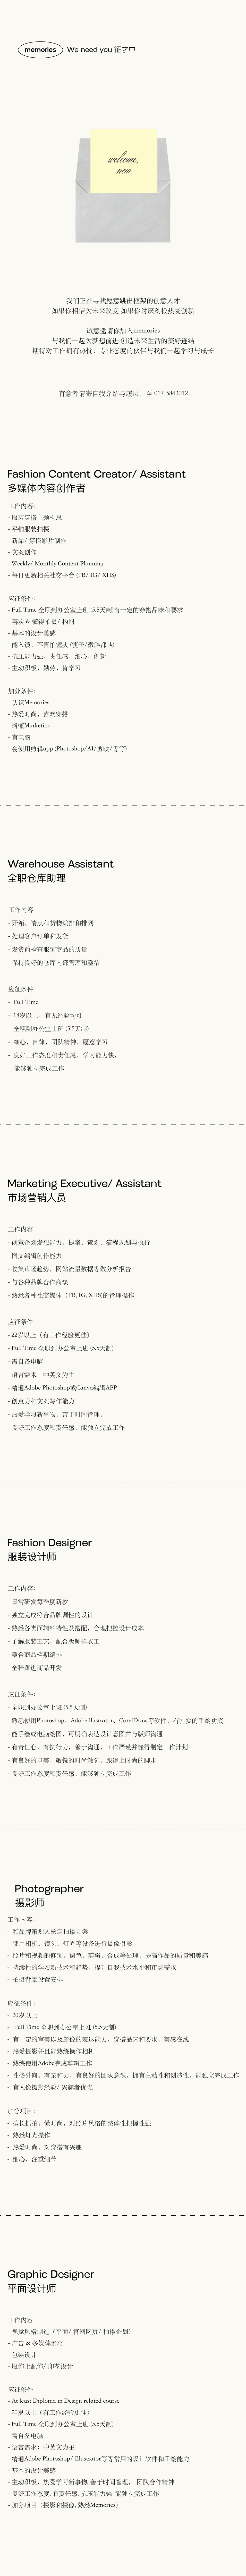 hiring-01